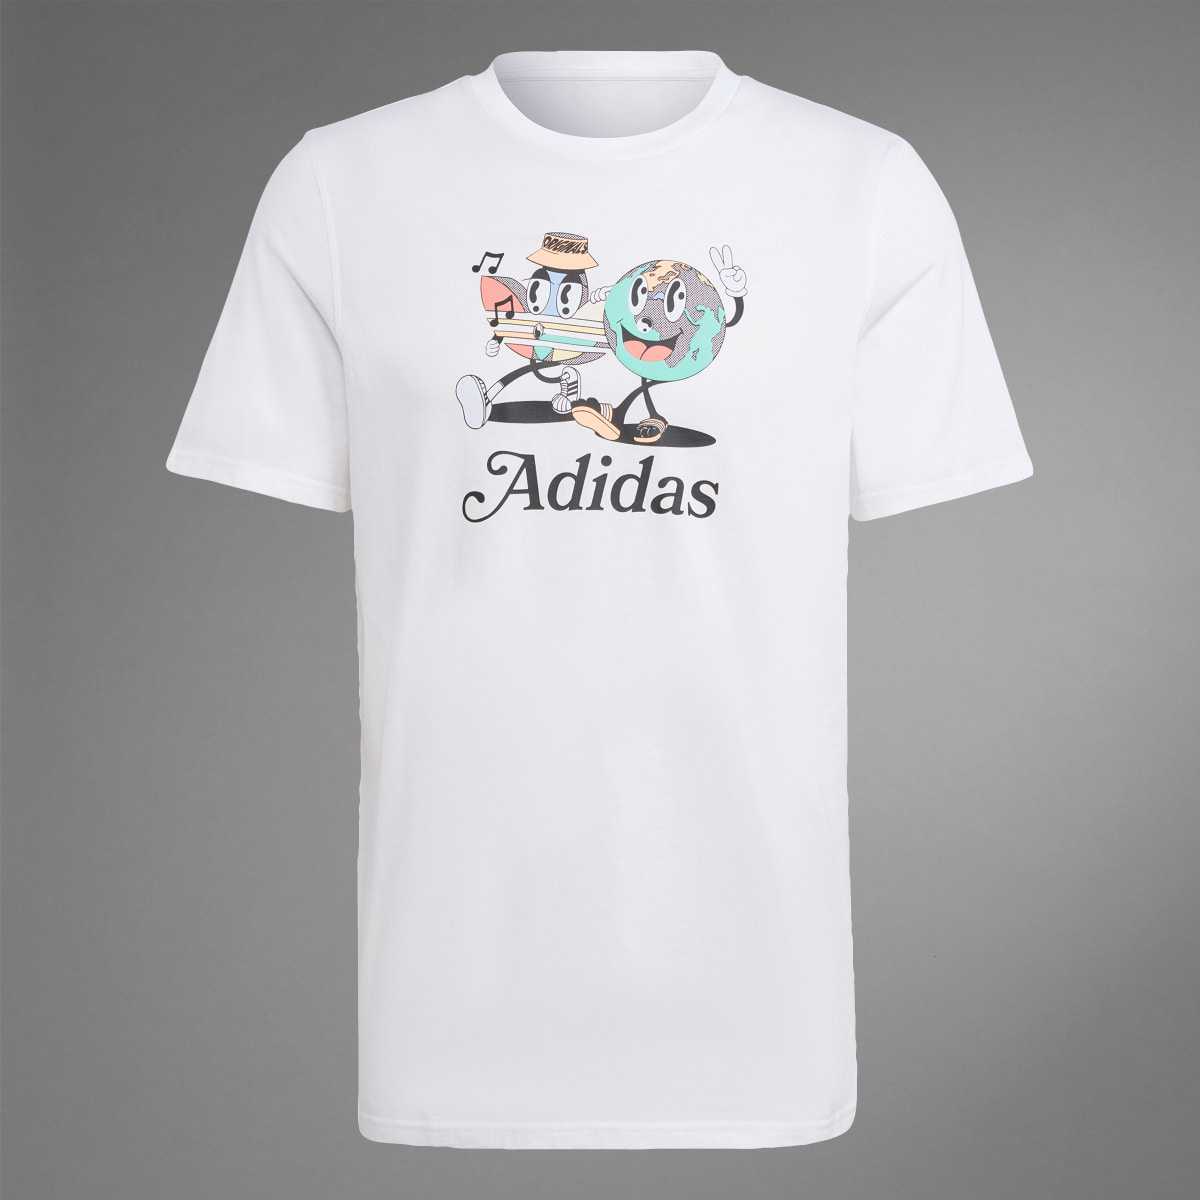 Adidas Enjoy Summer Graphic T-Shirt. 10